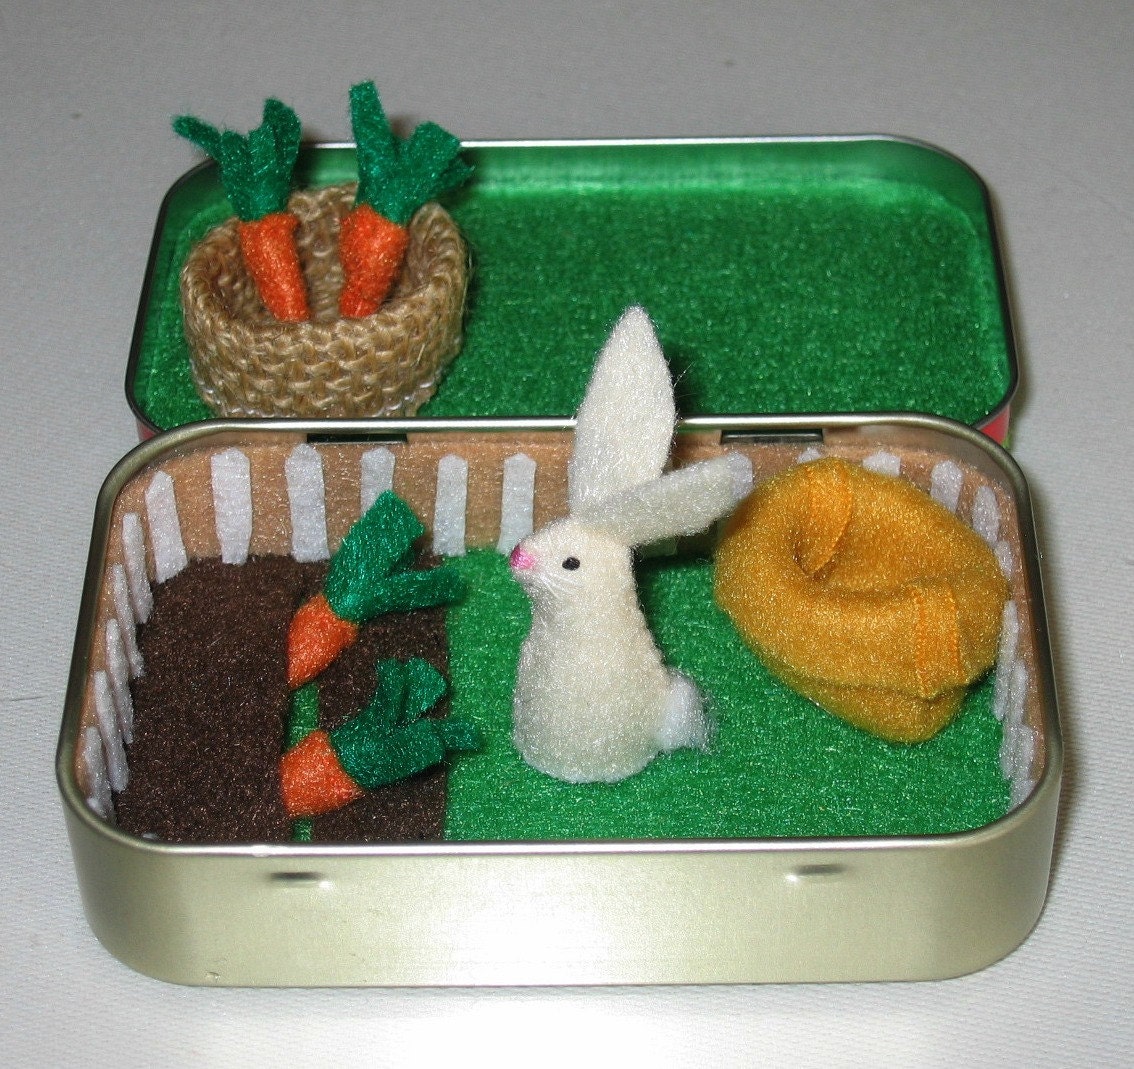 Rabbit garden play set in Altoid tin - with felt rabbit, carrots, basket and snuggle bag